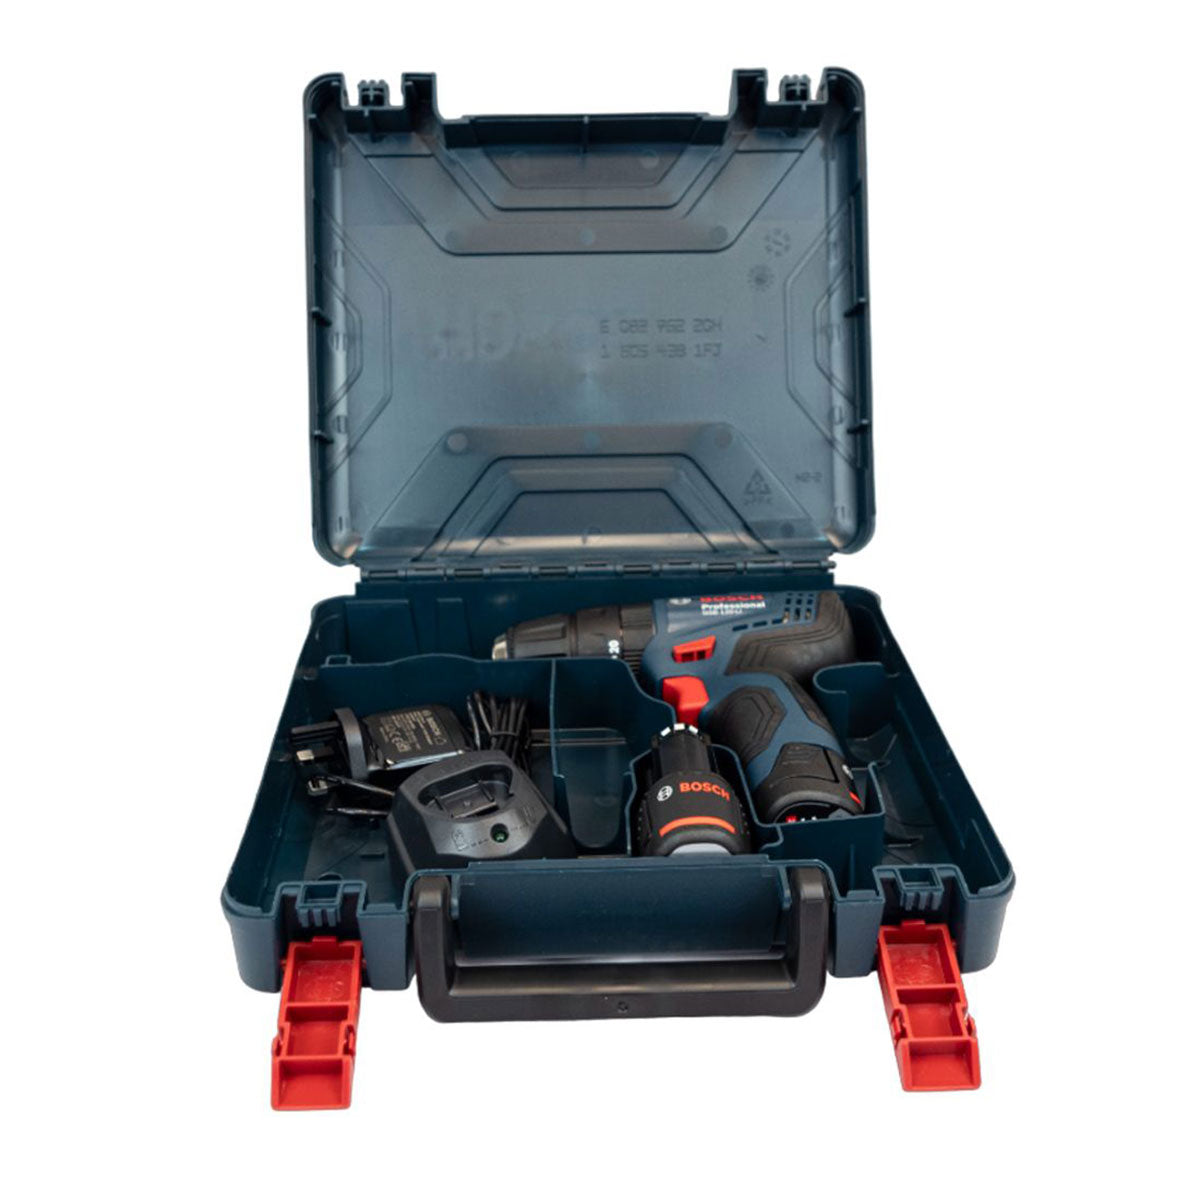 Bosch GSB 120-LI 12V Combi Drill With 2 x 2.0Ah Batteries Charger & Case 06019G8170